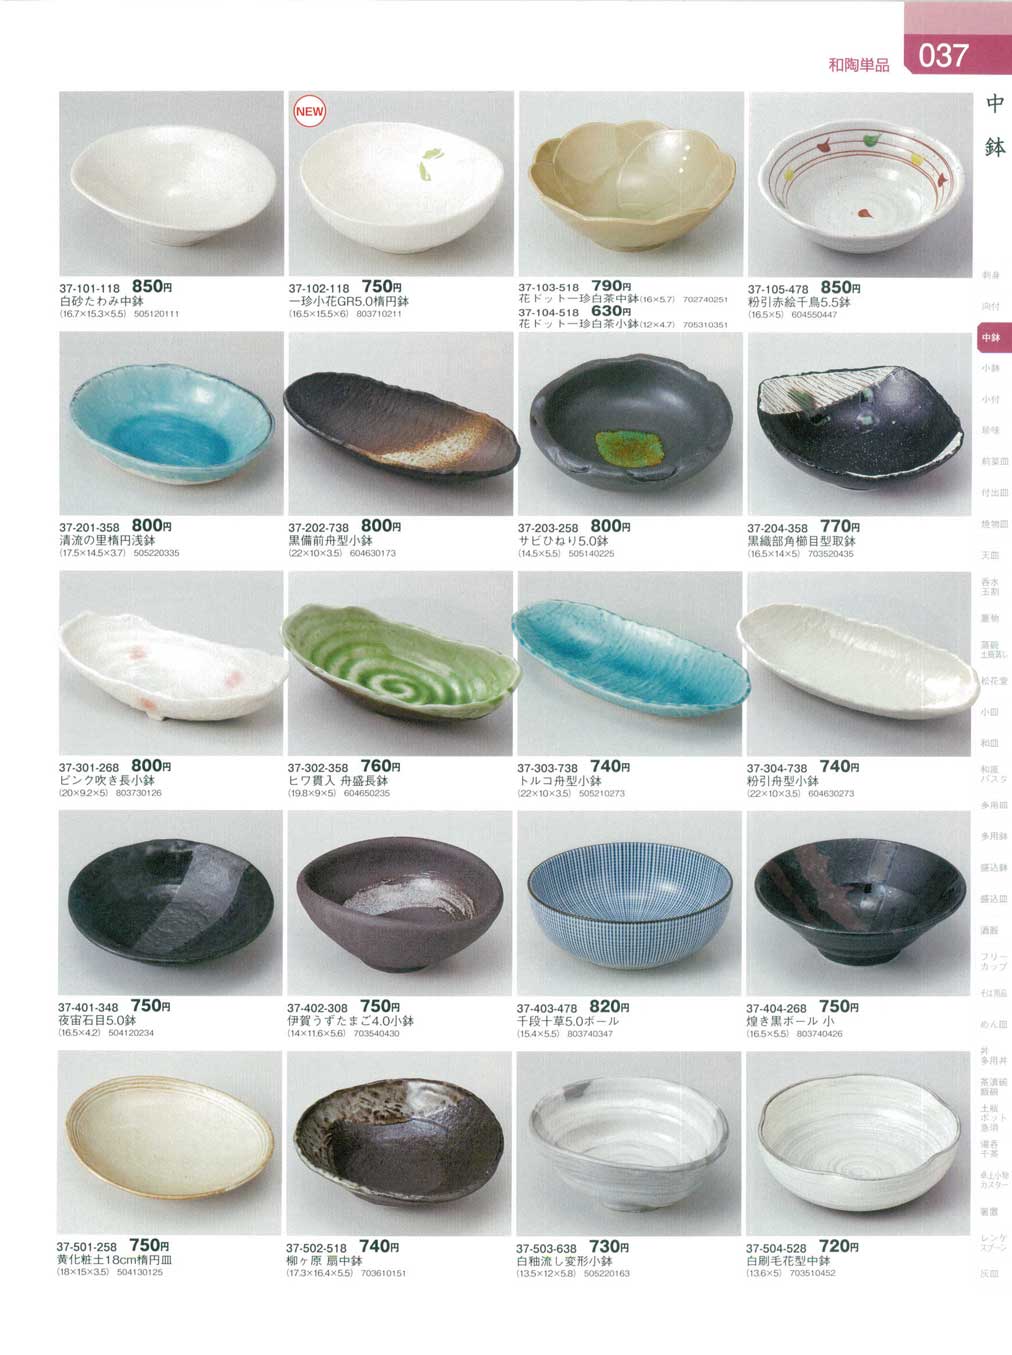 日本オンライン  染付筆洗茶碗（共箱） 山口寛治造 陶芸